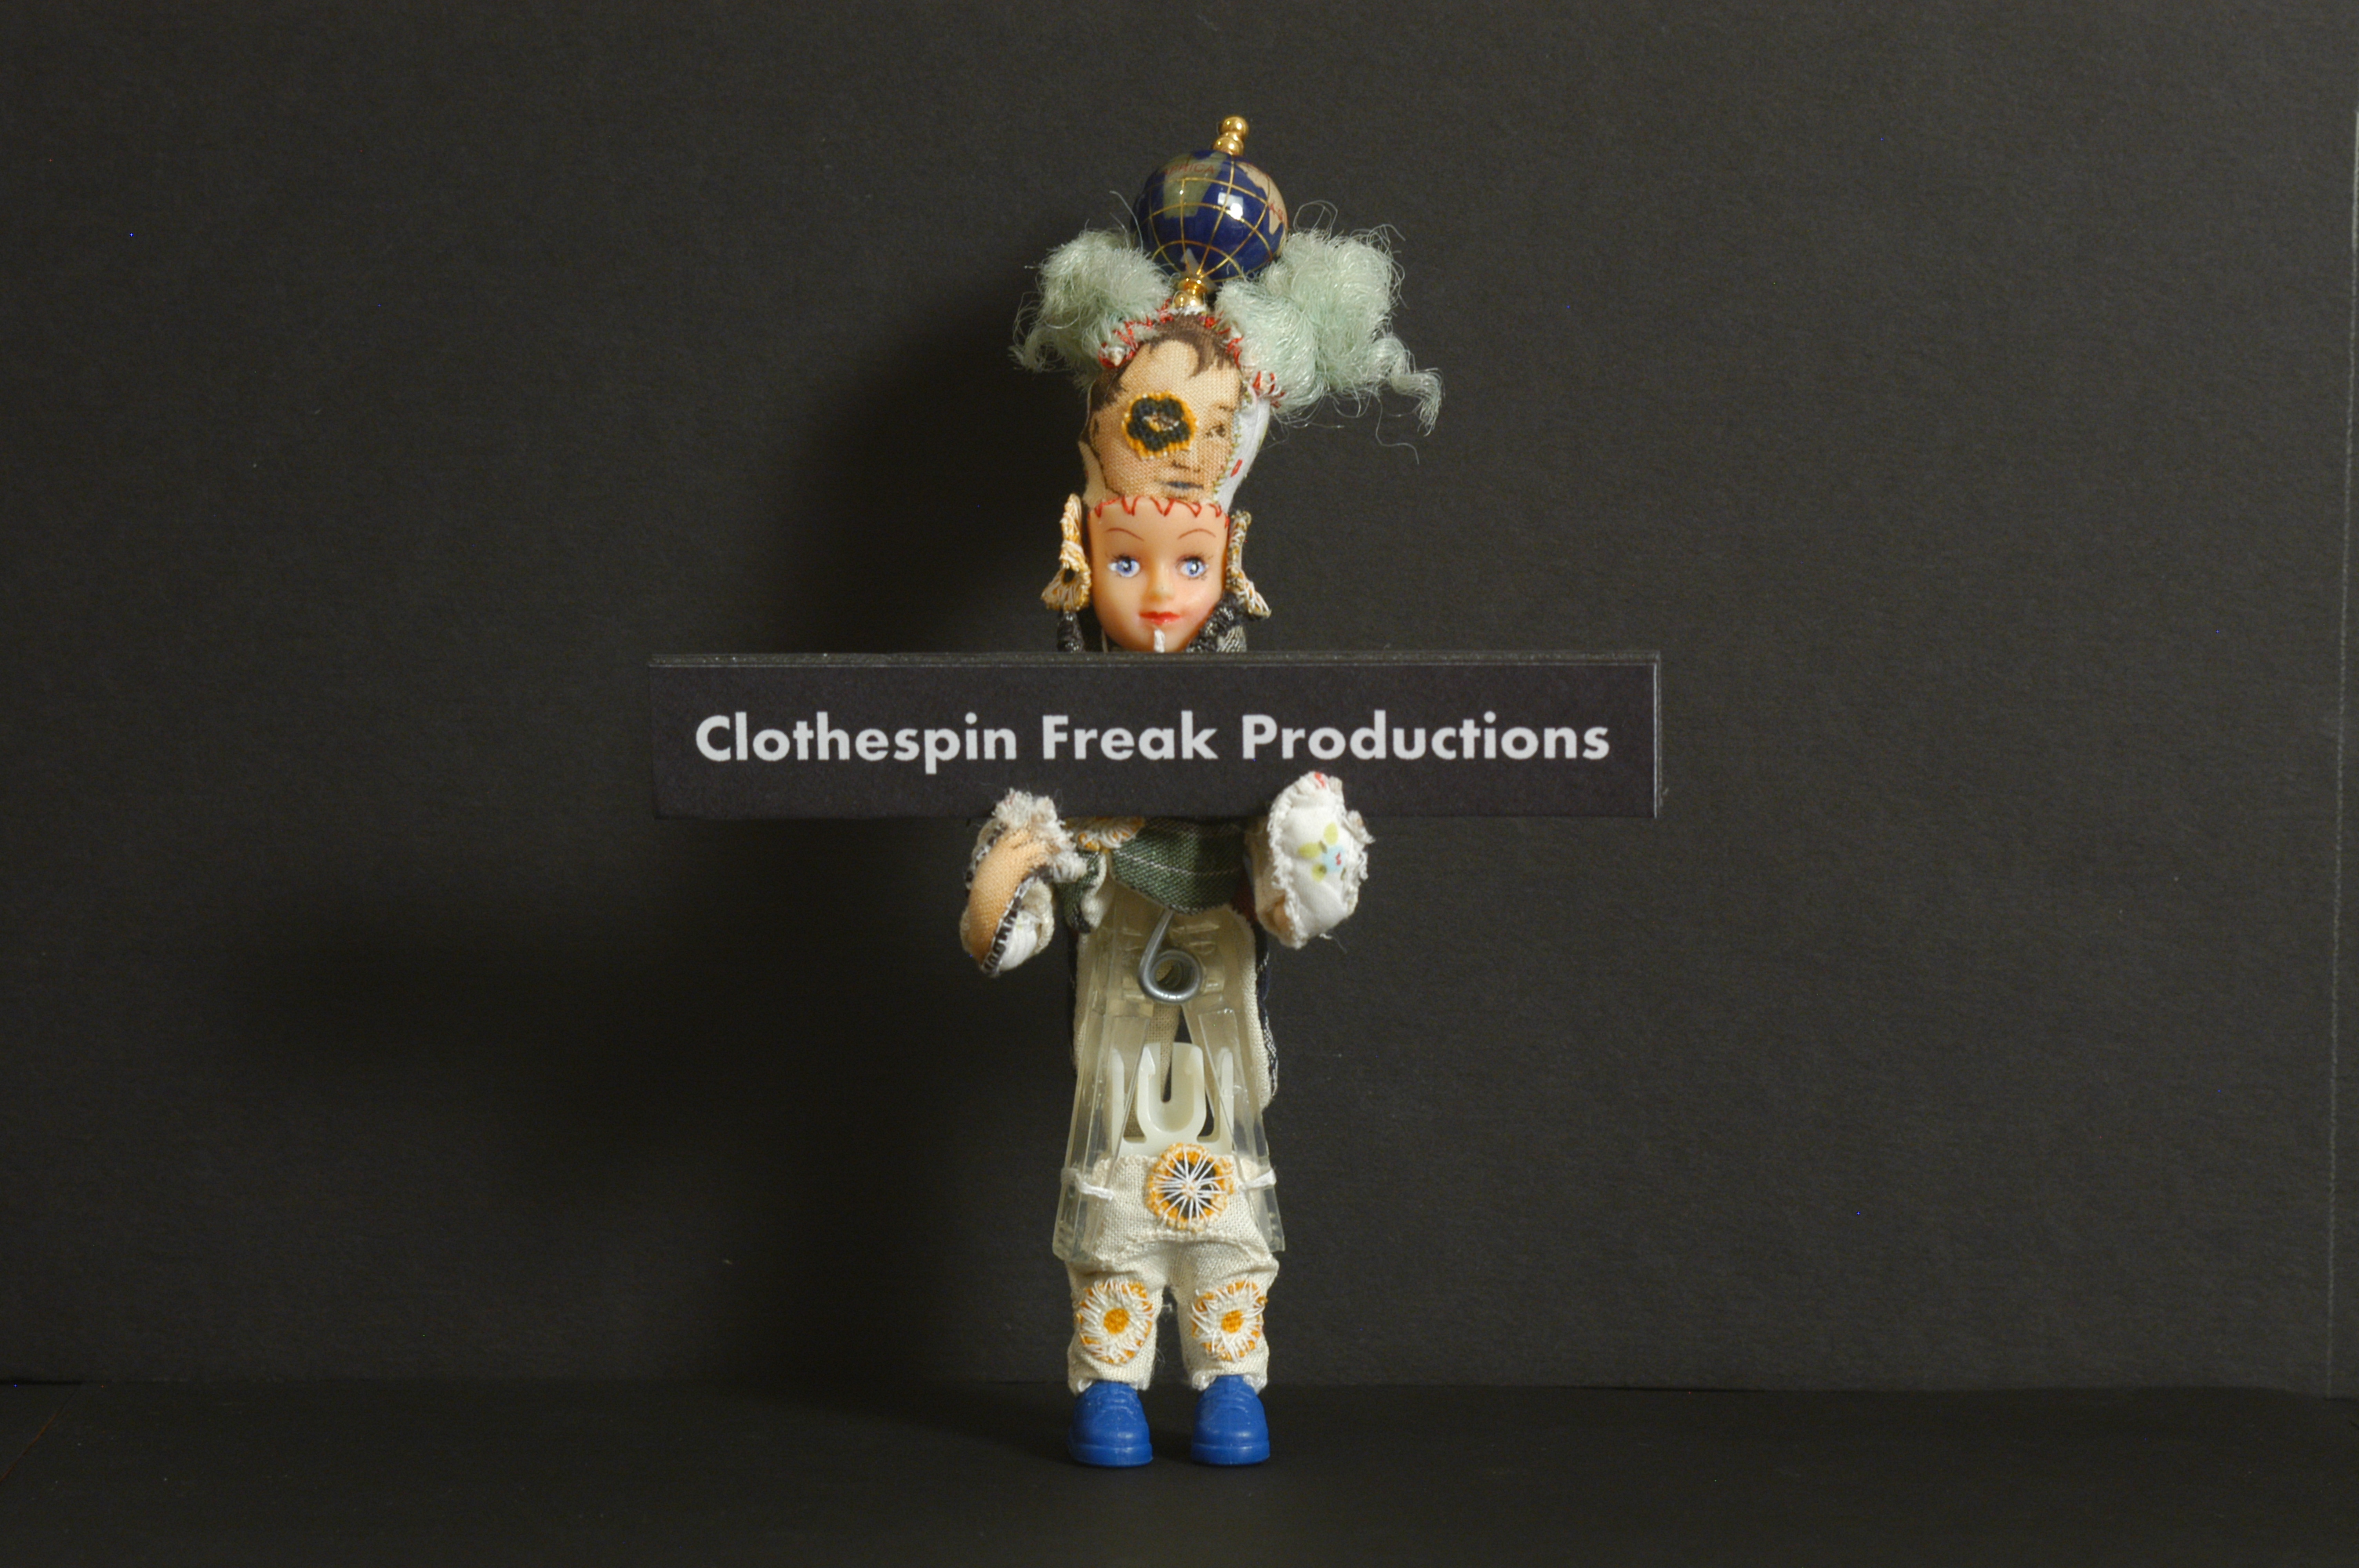 Clothespin Freak Productions logo.